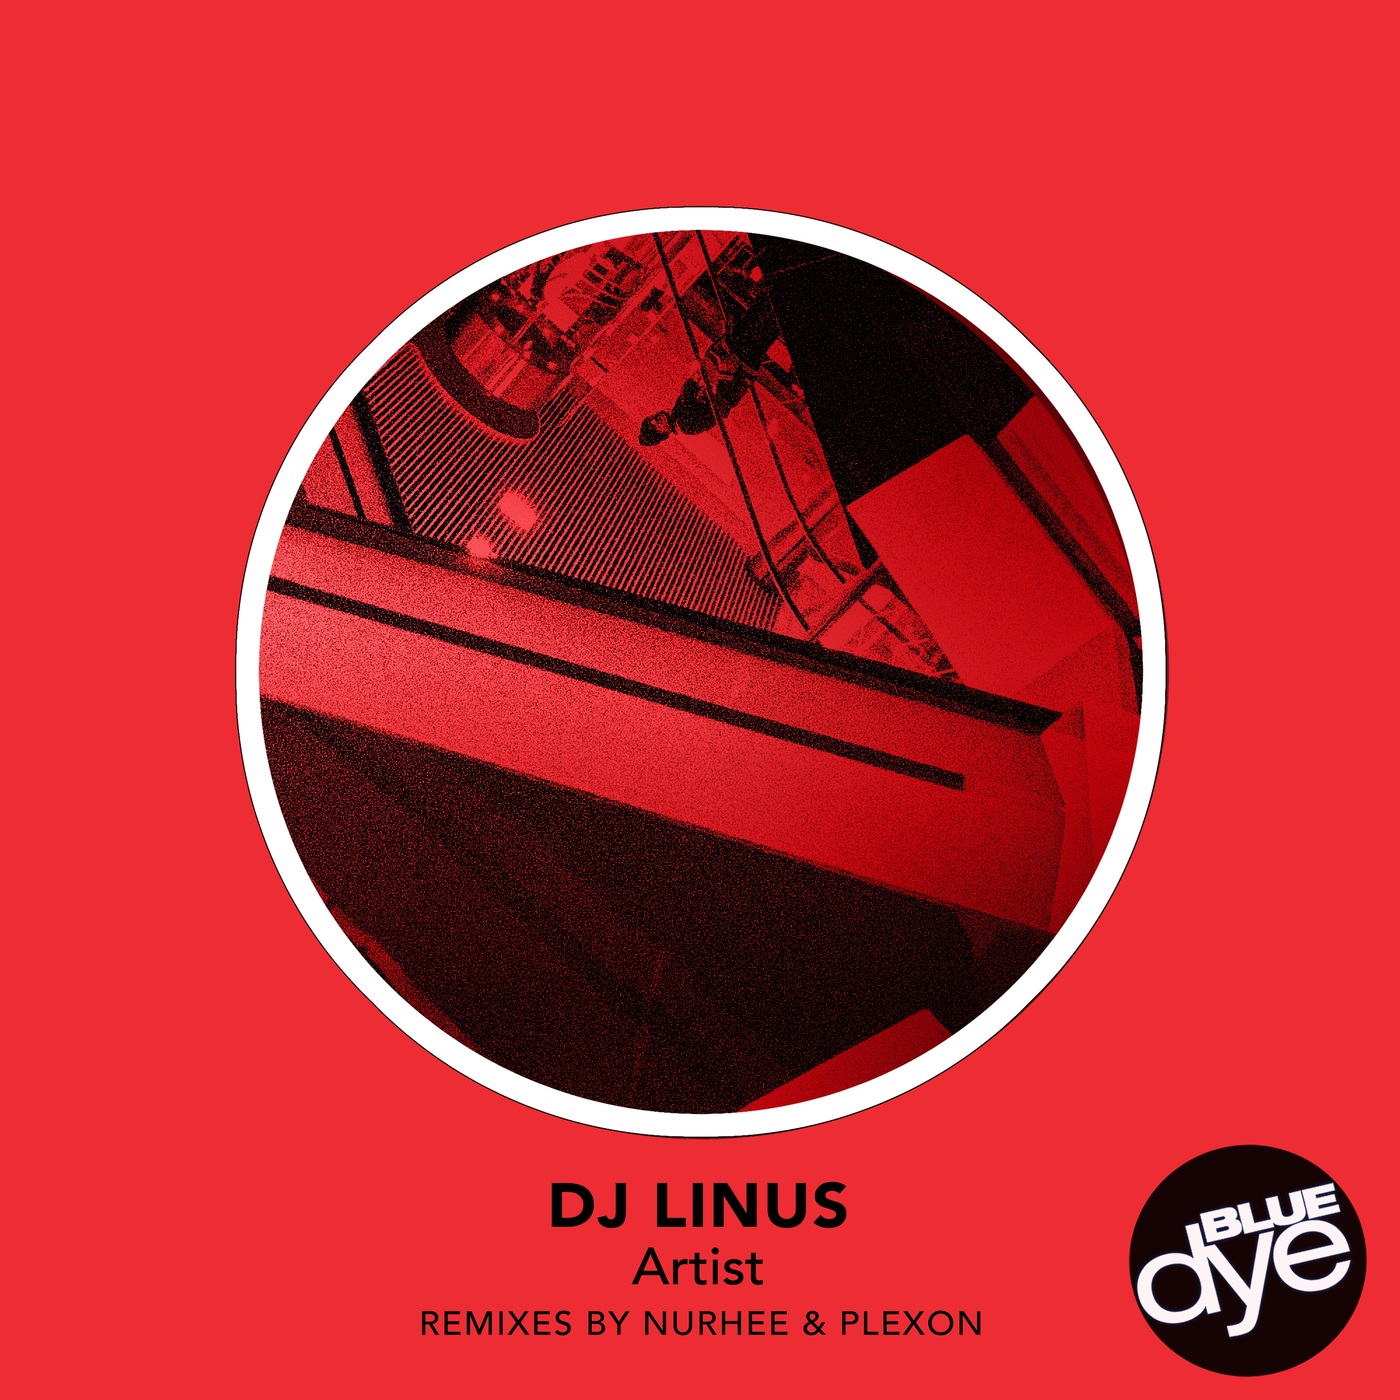 DJ Linus - Artist / Blue Dye